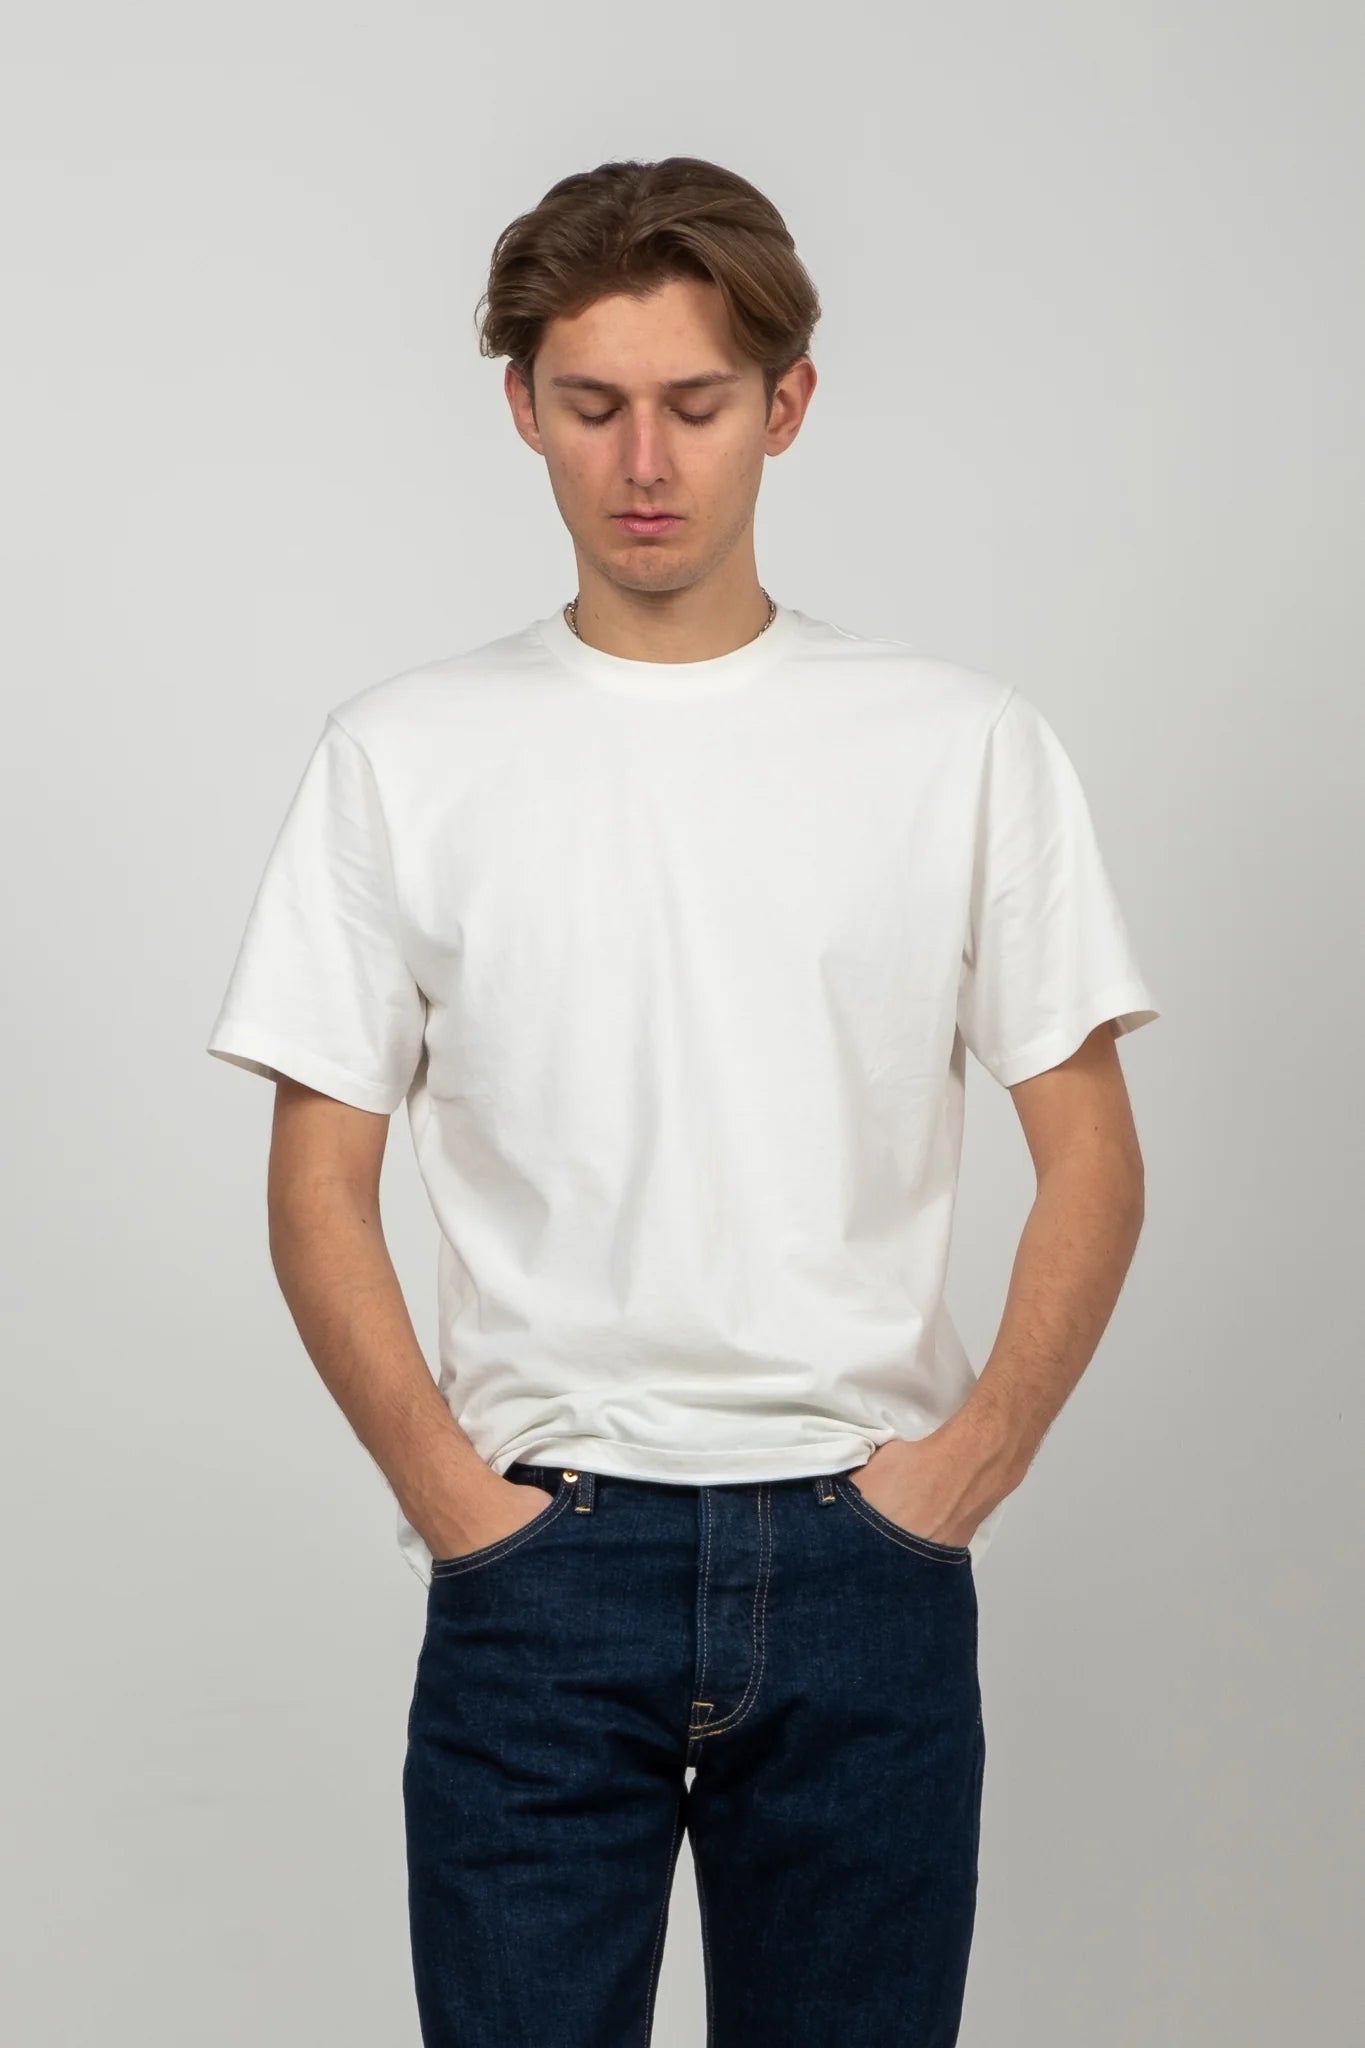 C.O.F. Studio Crewneck T-Shirt in white